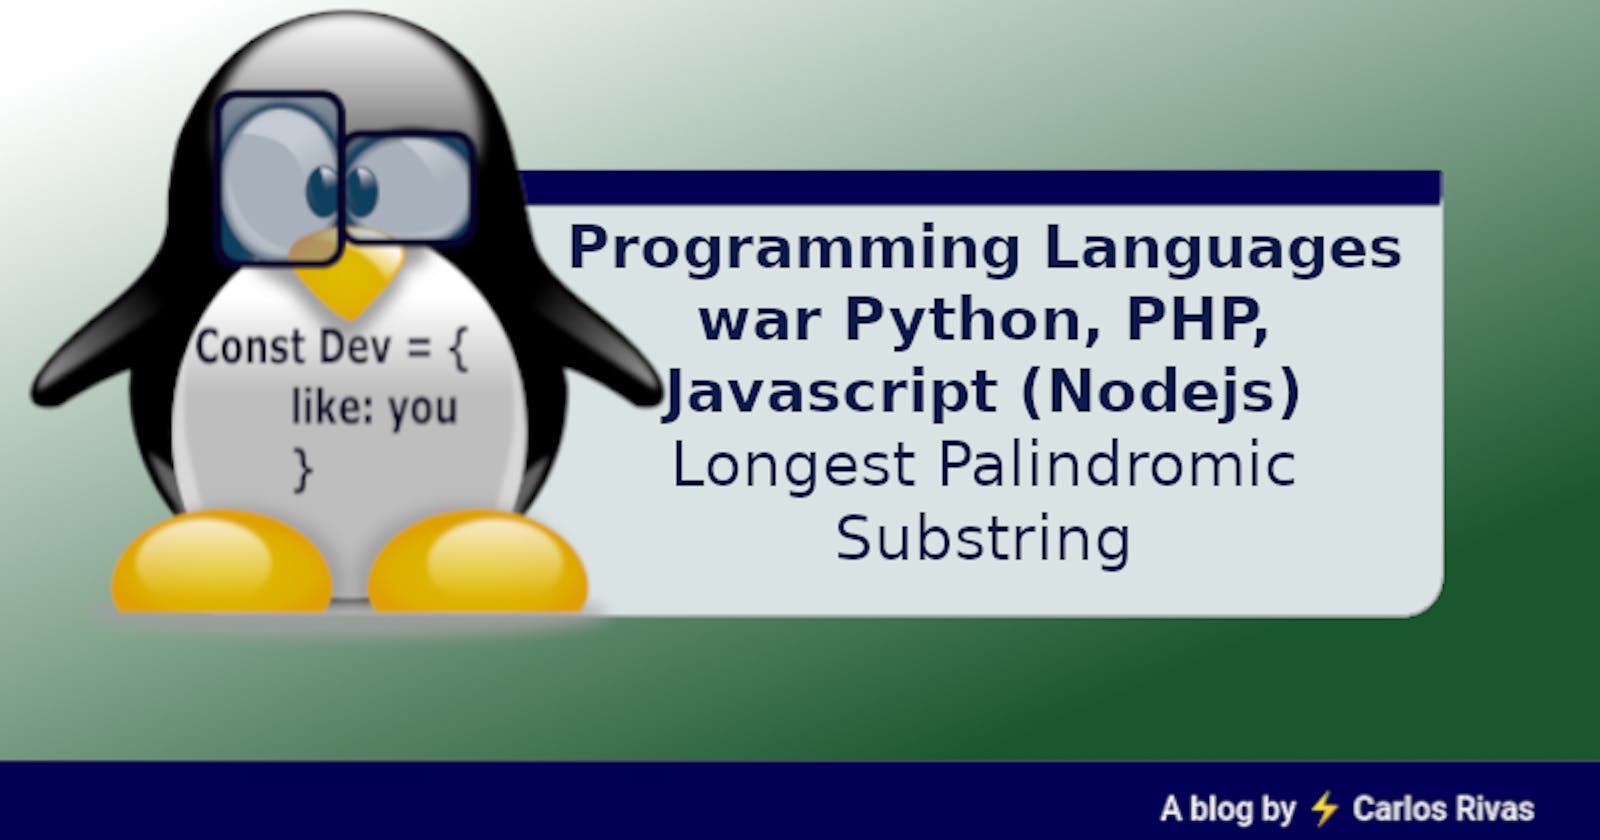 Programming Languages war
Python, PHP, Javascript (Nodejs)
Longest Palindromic Substring